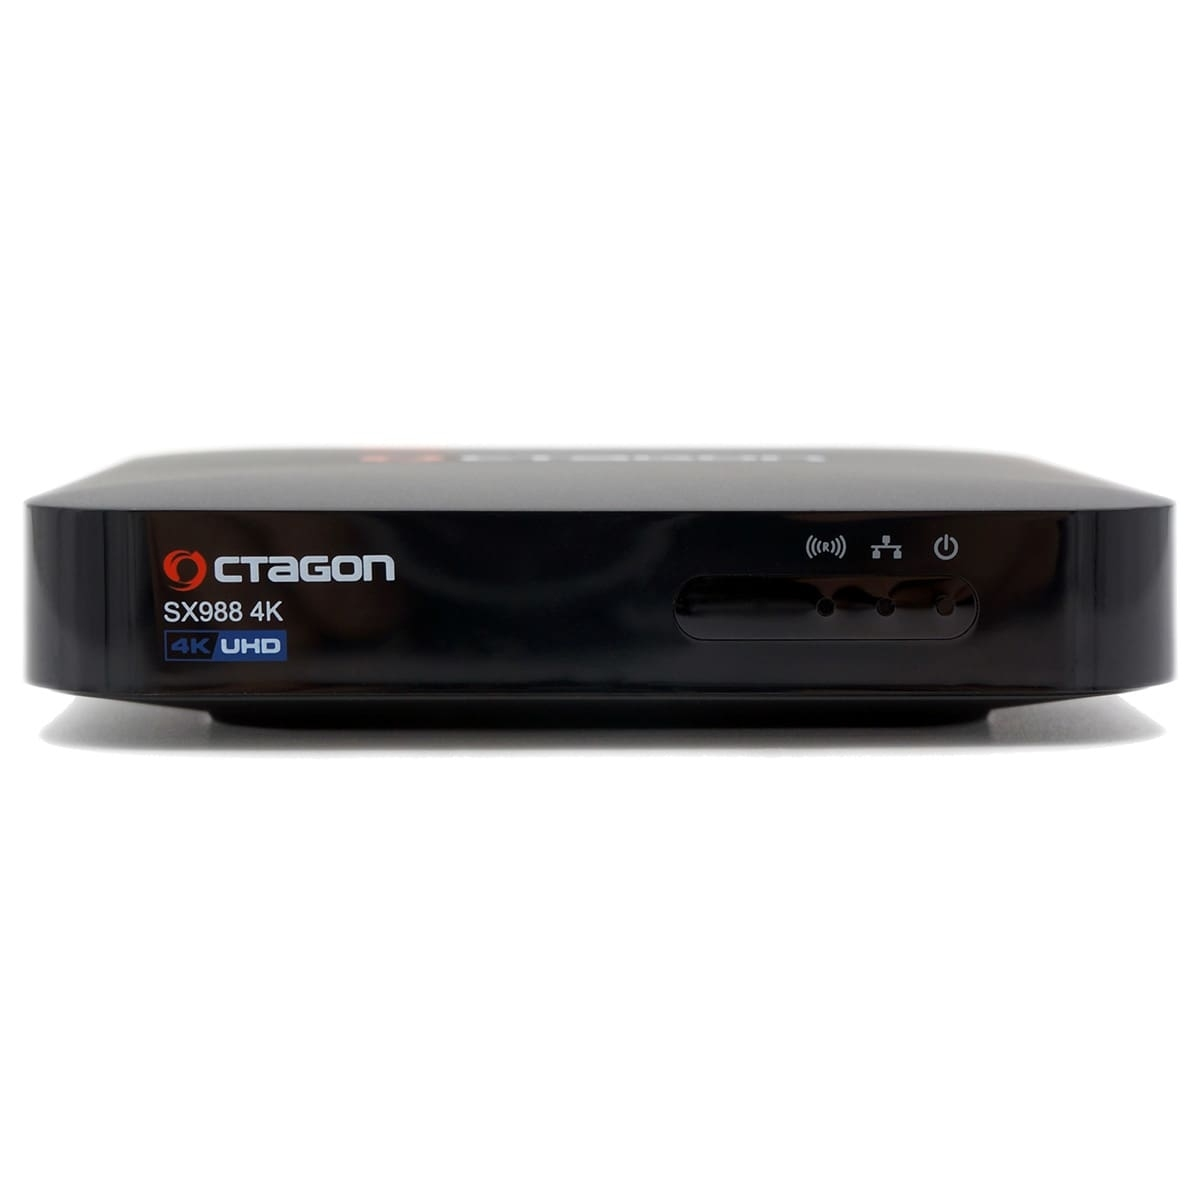 OCTAGON SX988 Mbit/s GB Wifi IP 8 300